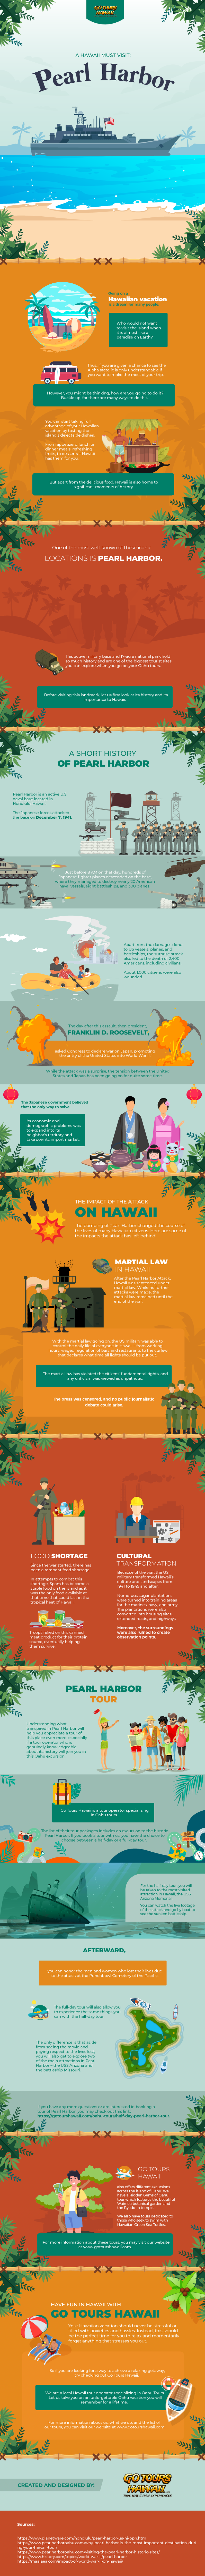 Hawaii-Tourist-Spot-Welcome-to-Pearl-Harbor-infographic-image-HU123